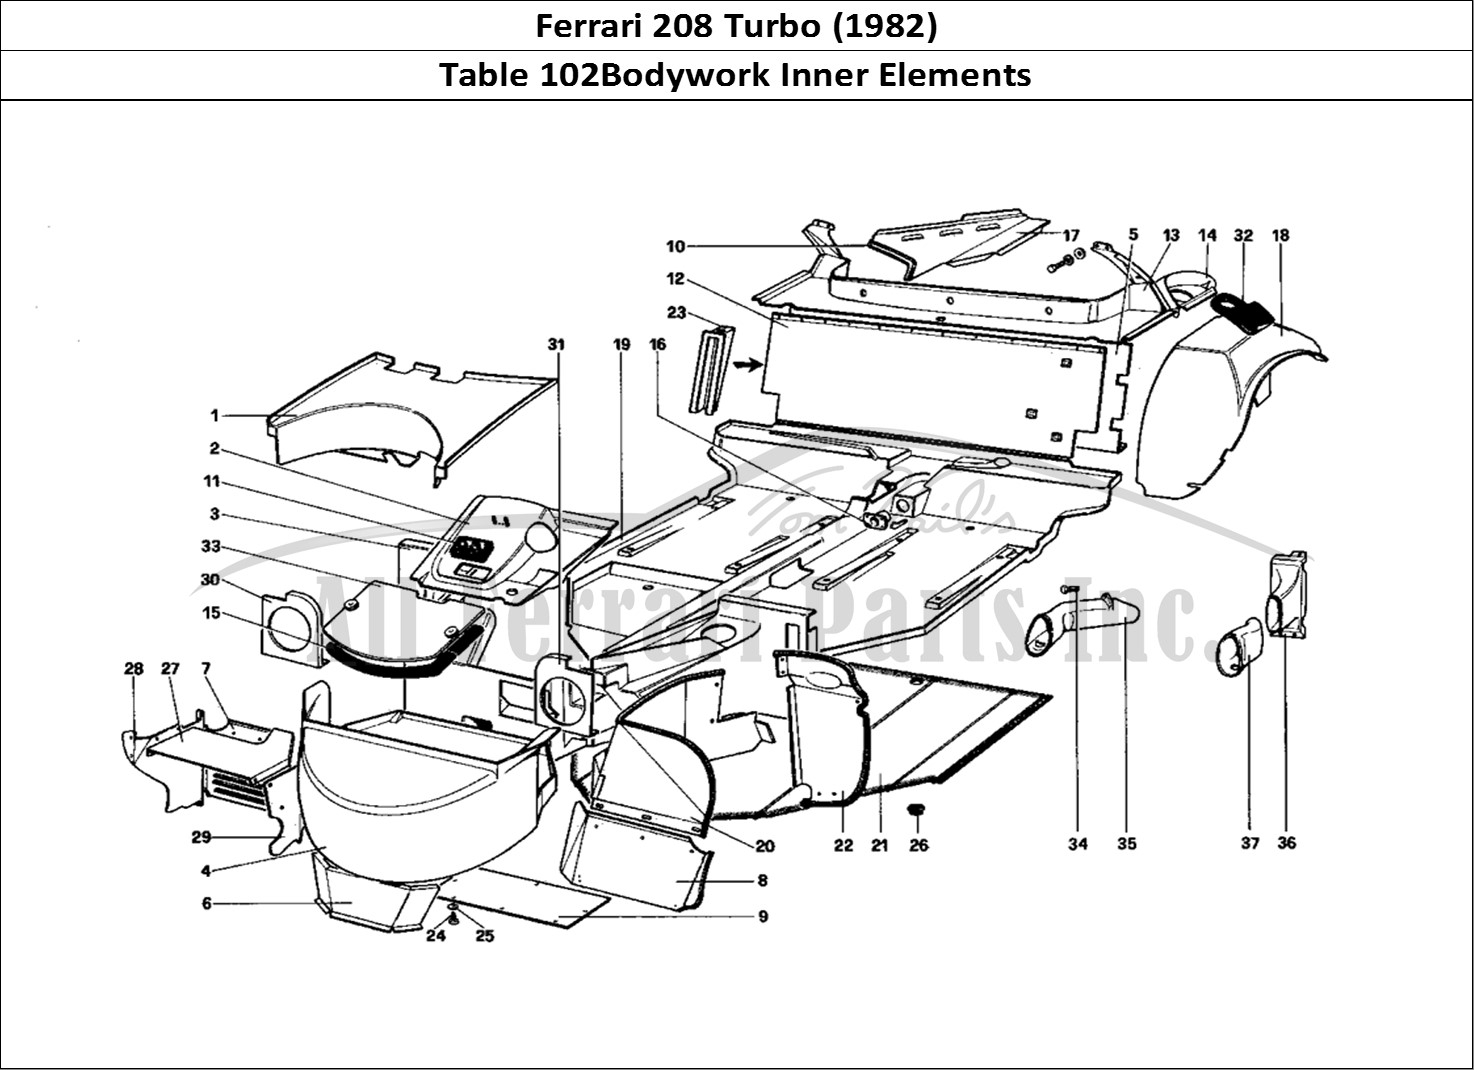 Ferrari Parts Ferrari 208 Turbo (1982) Page 102 Body Shell - Inner Elemen